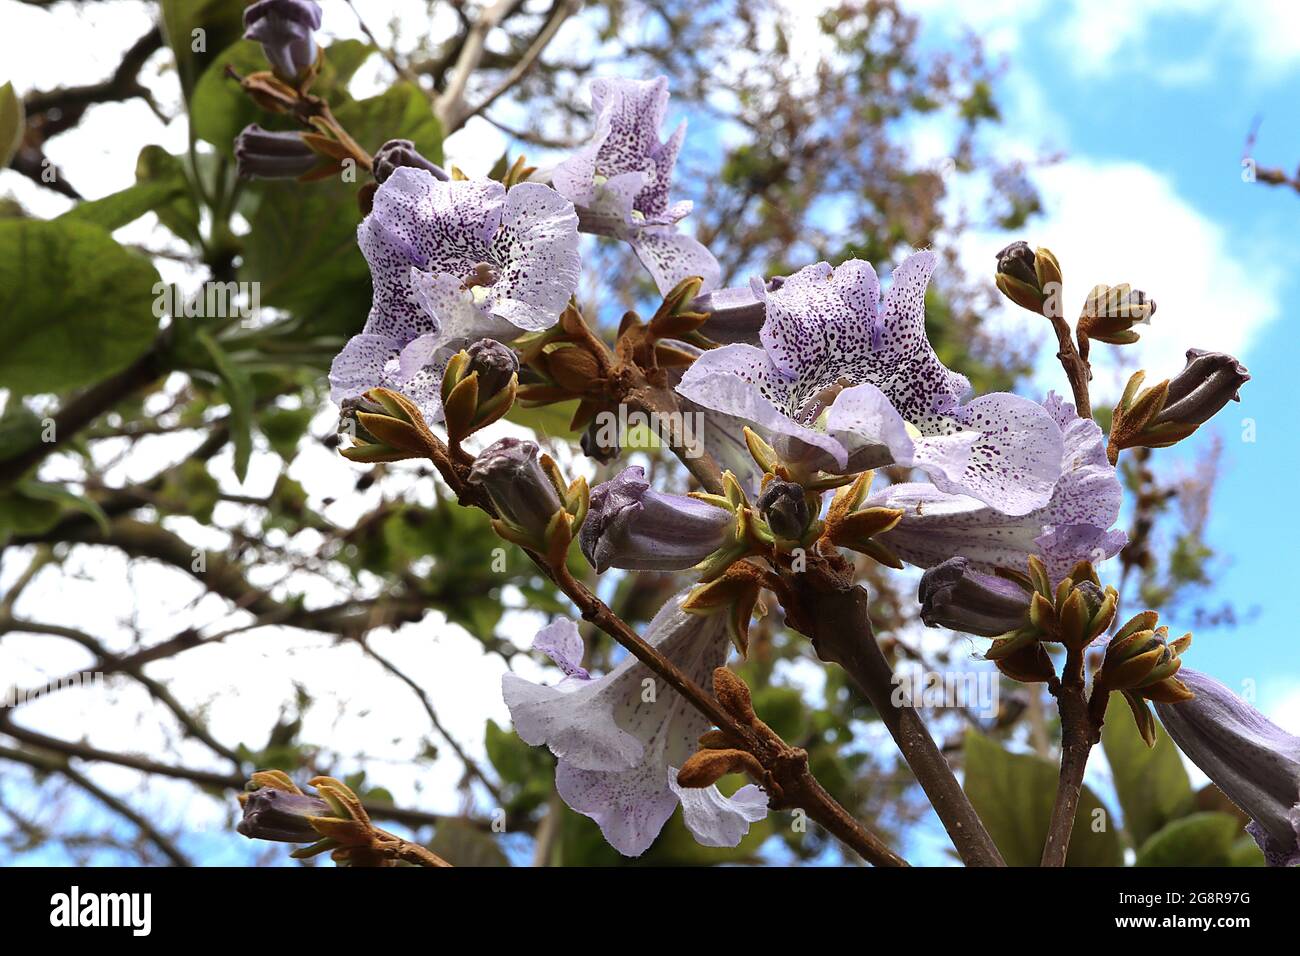 Pawlonia kawakamii Sapphire dragon tree – wide open lilac purple foxglove-like flowers with cream throat and dark purple freckles,  May, England, UK Stock Photo